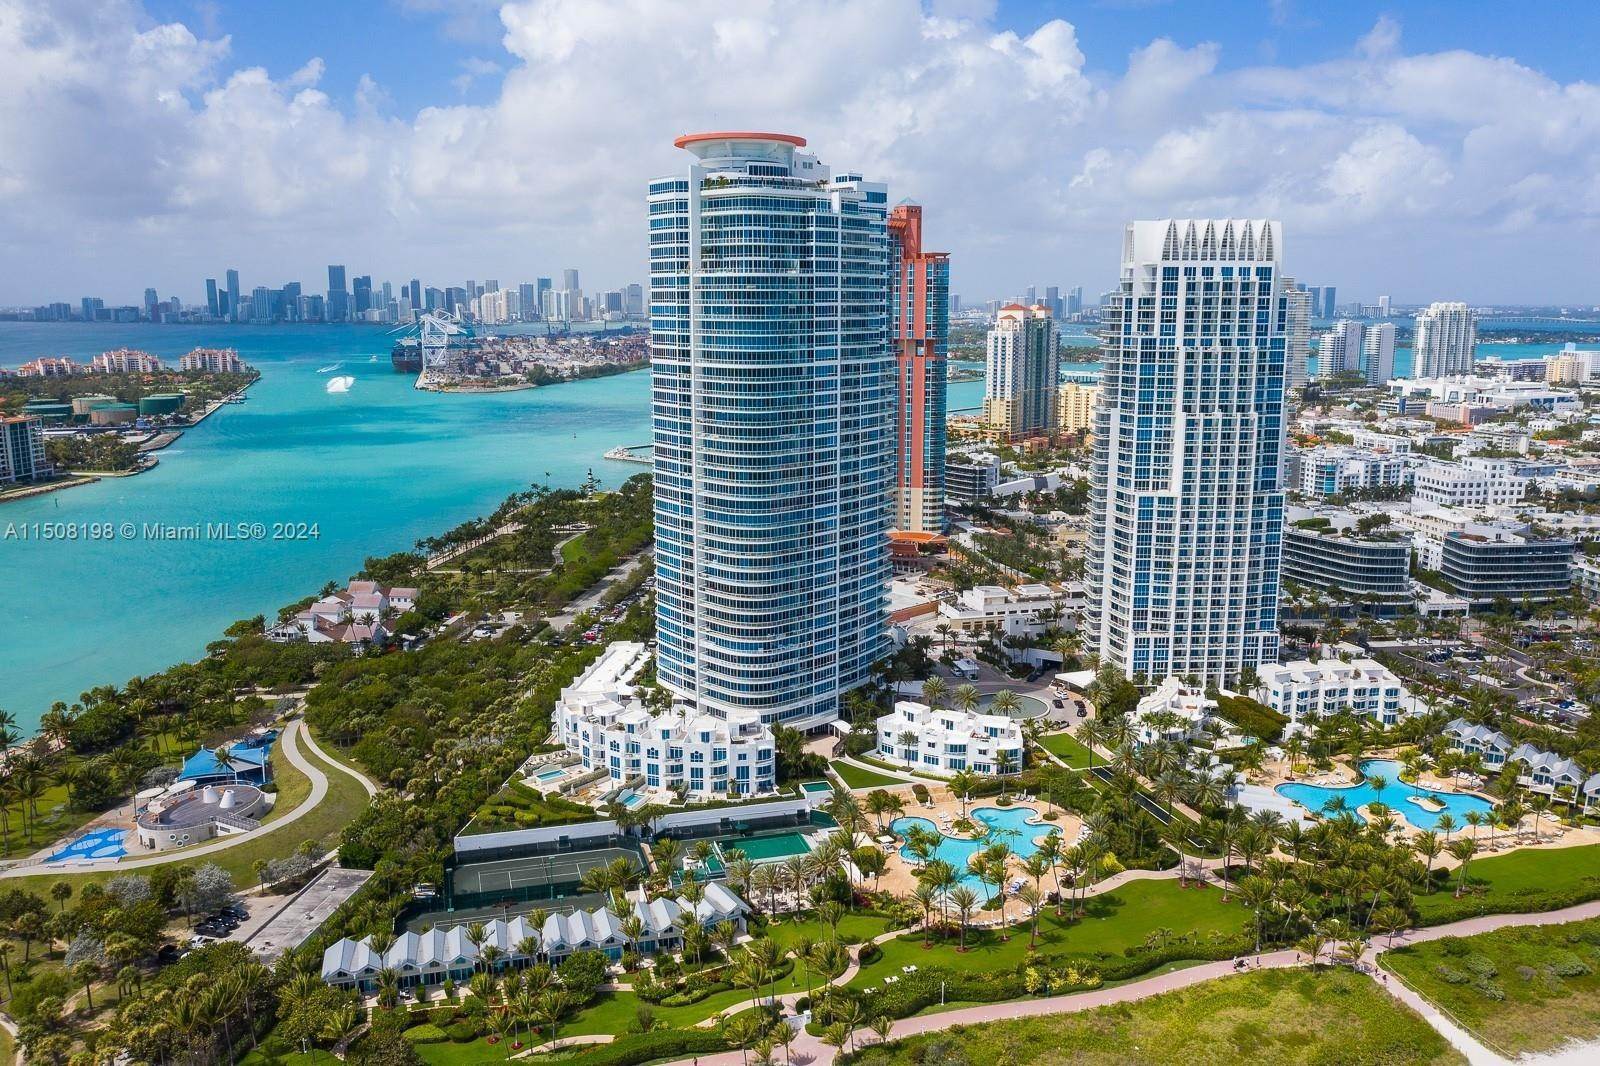 Condominium at South of Fifth, Miami Beach, FL 33139